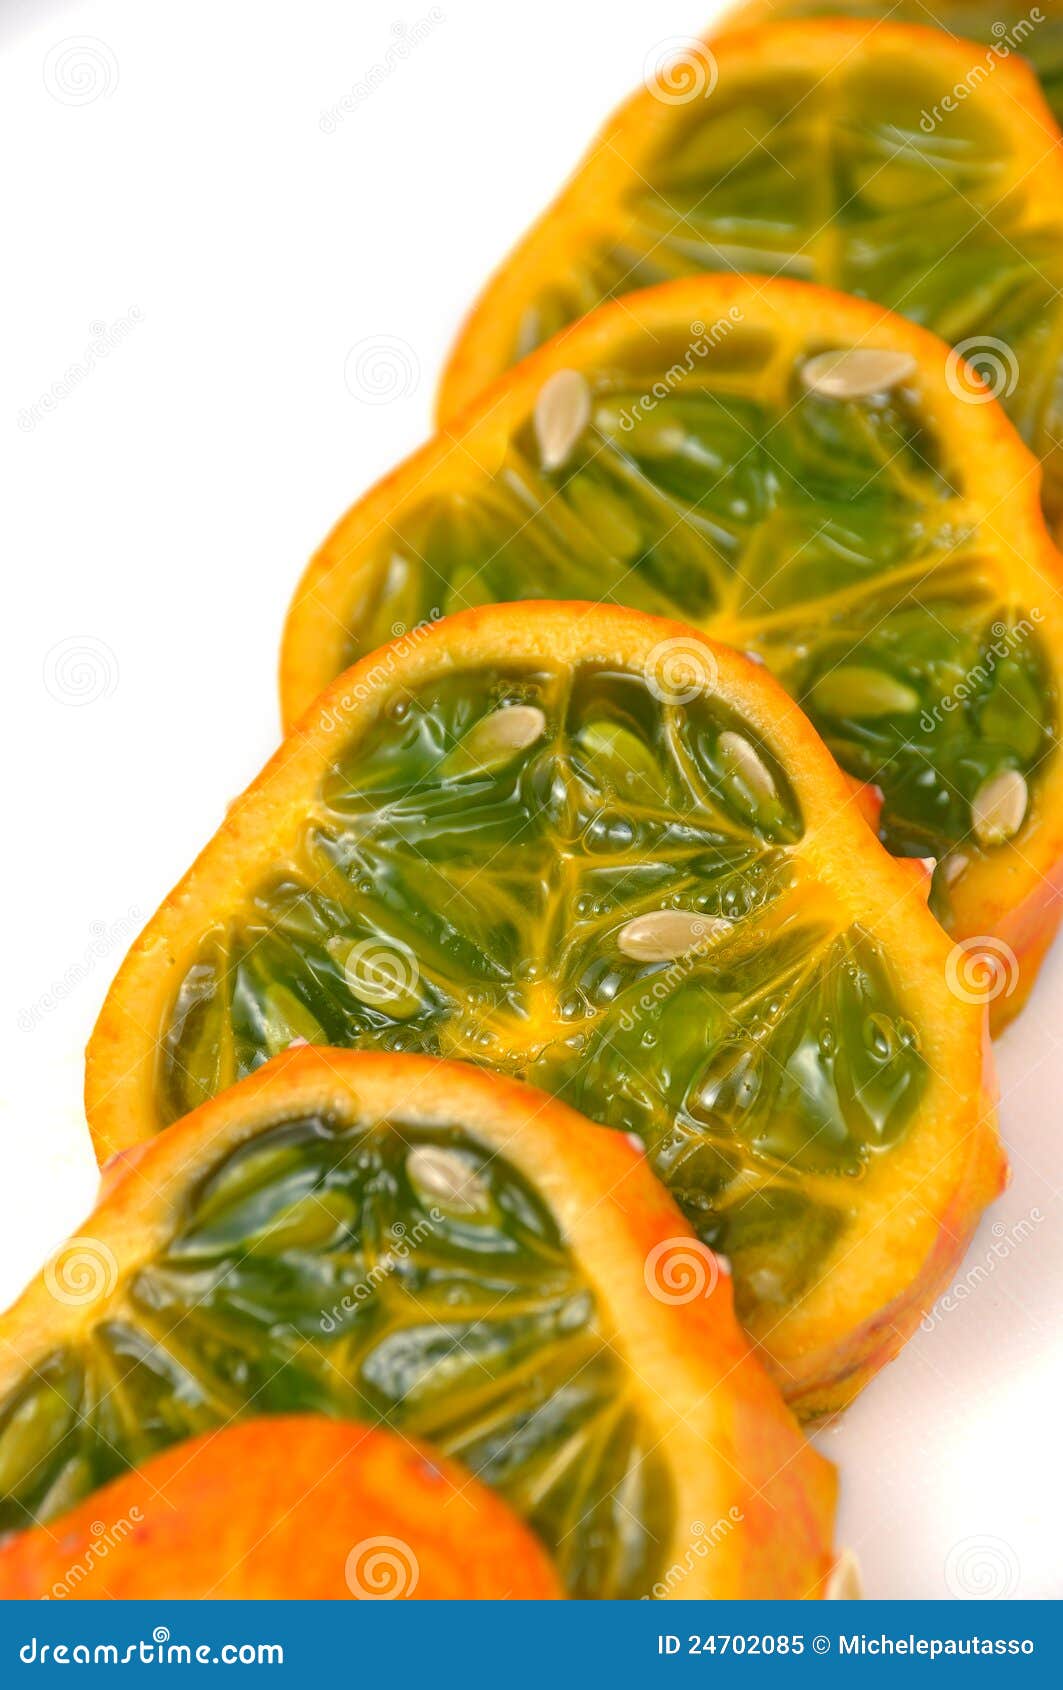 close up of fruta del paraiso